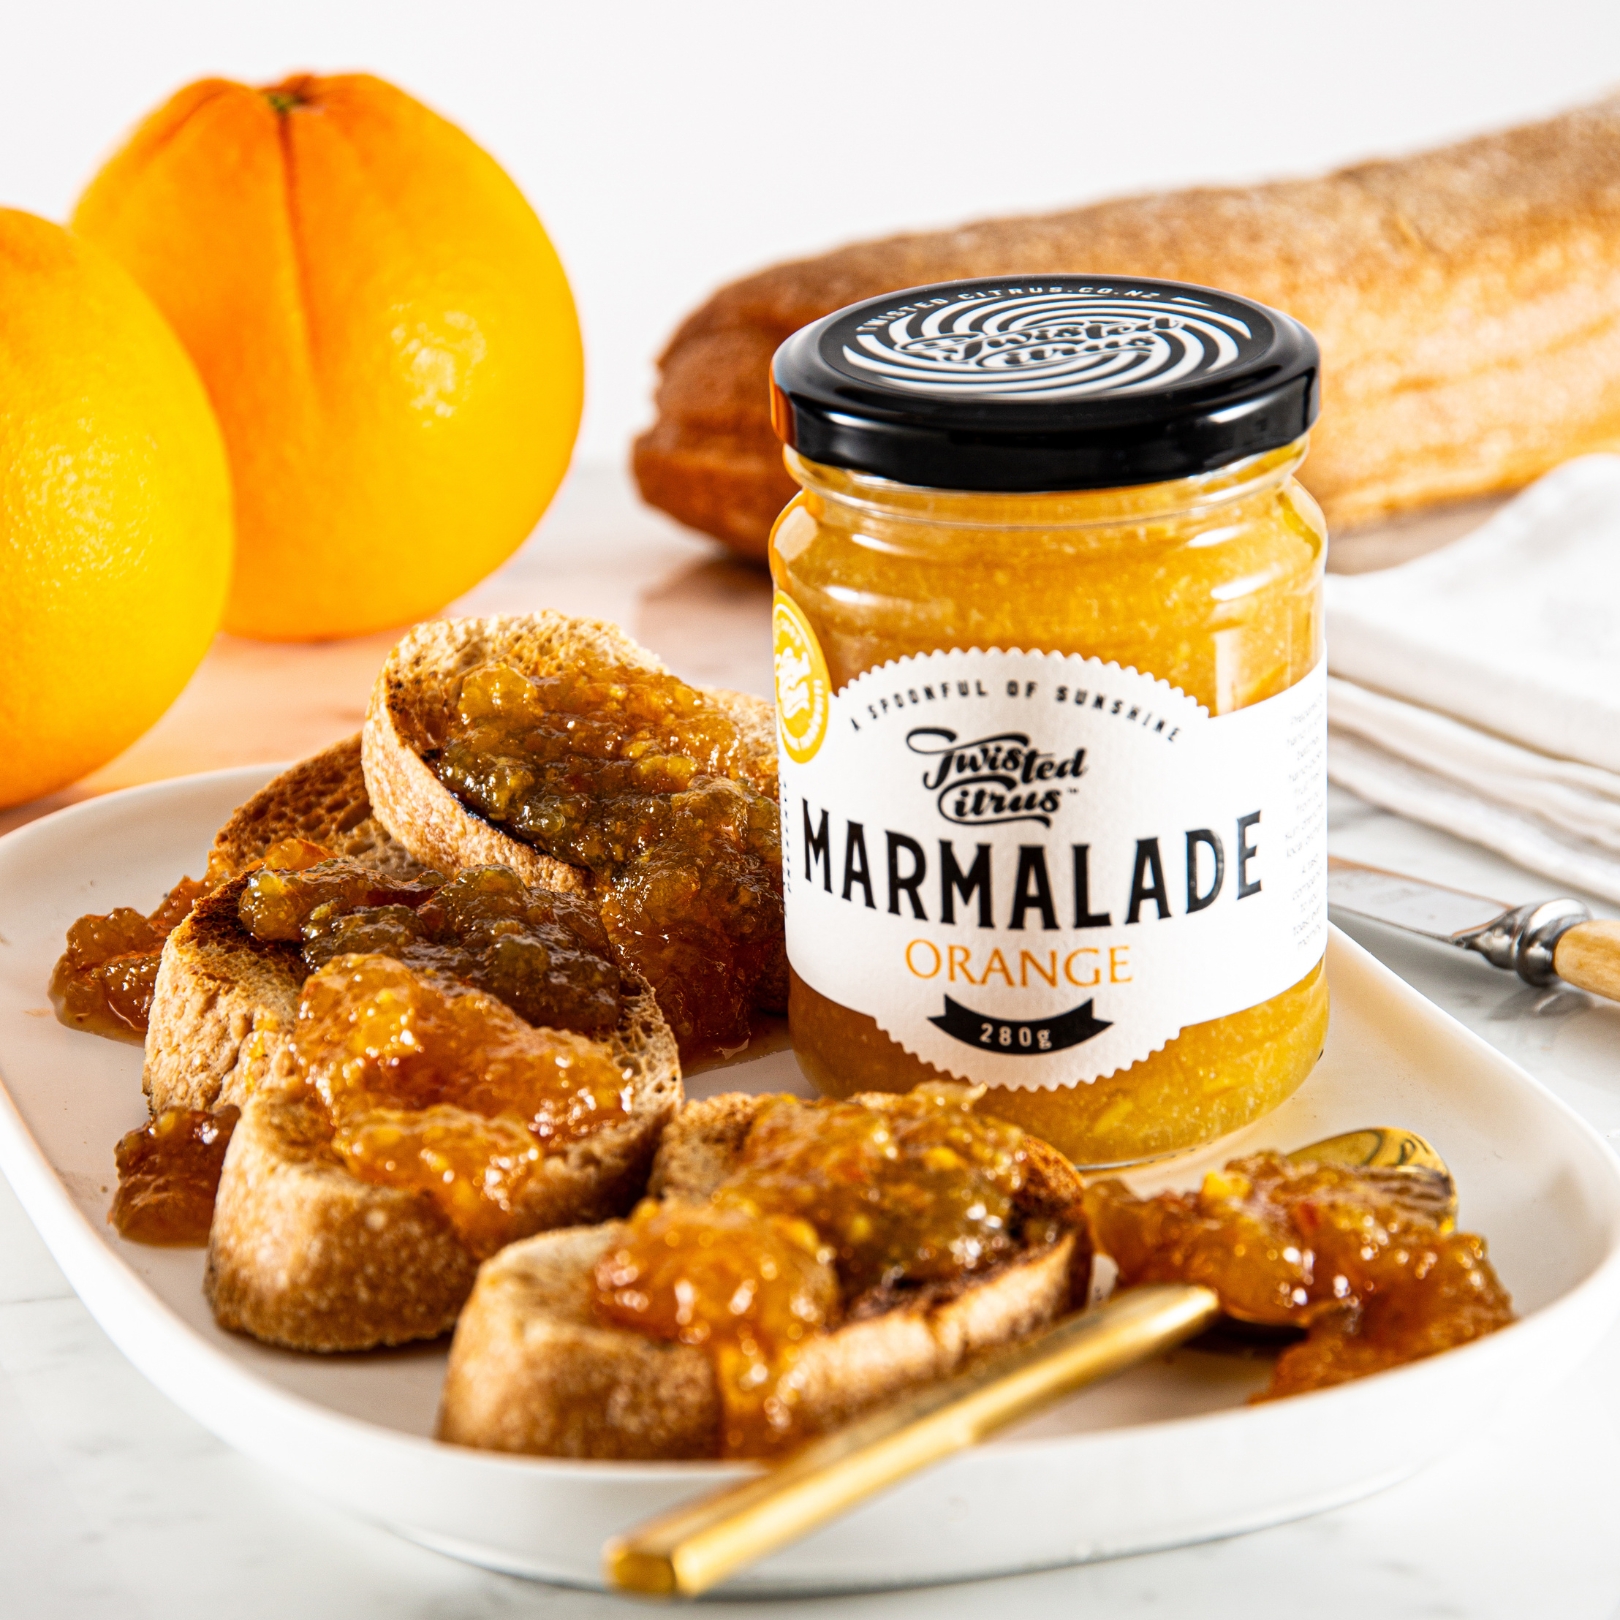 Buy Marmalade Online NZ